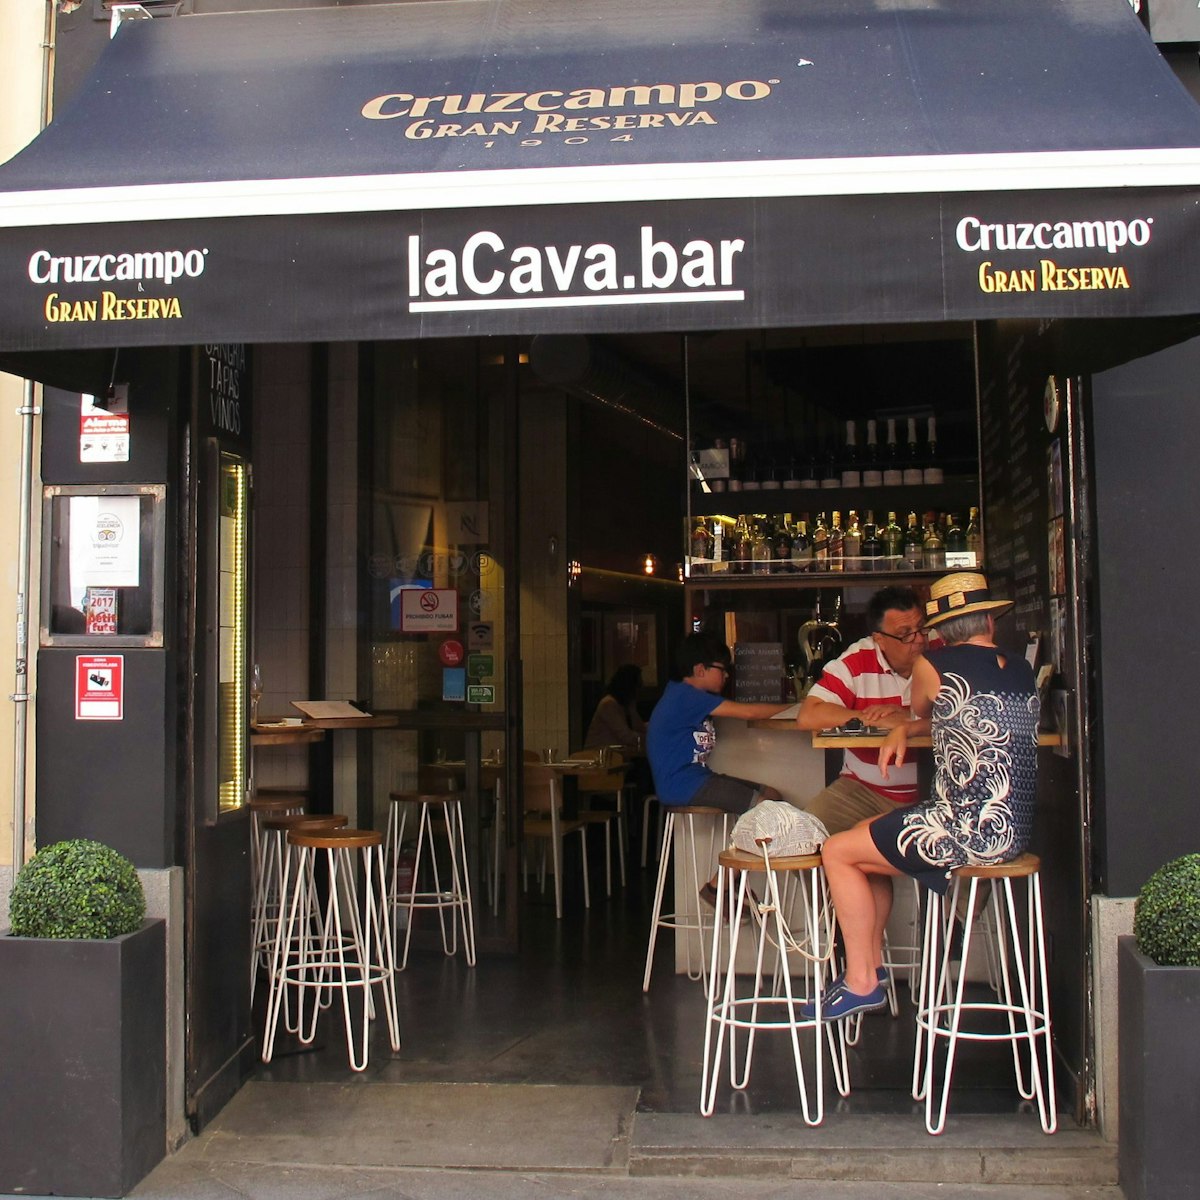 Lacava bar awning with name of bar.